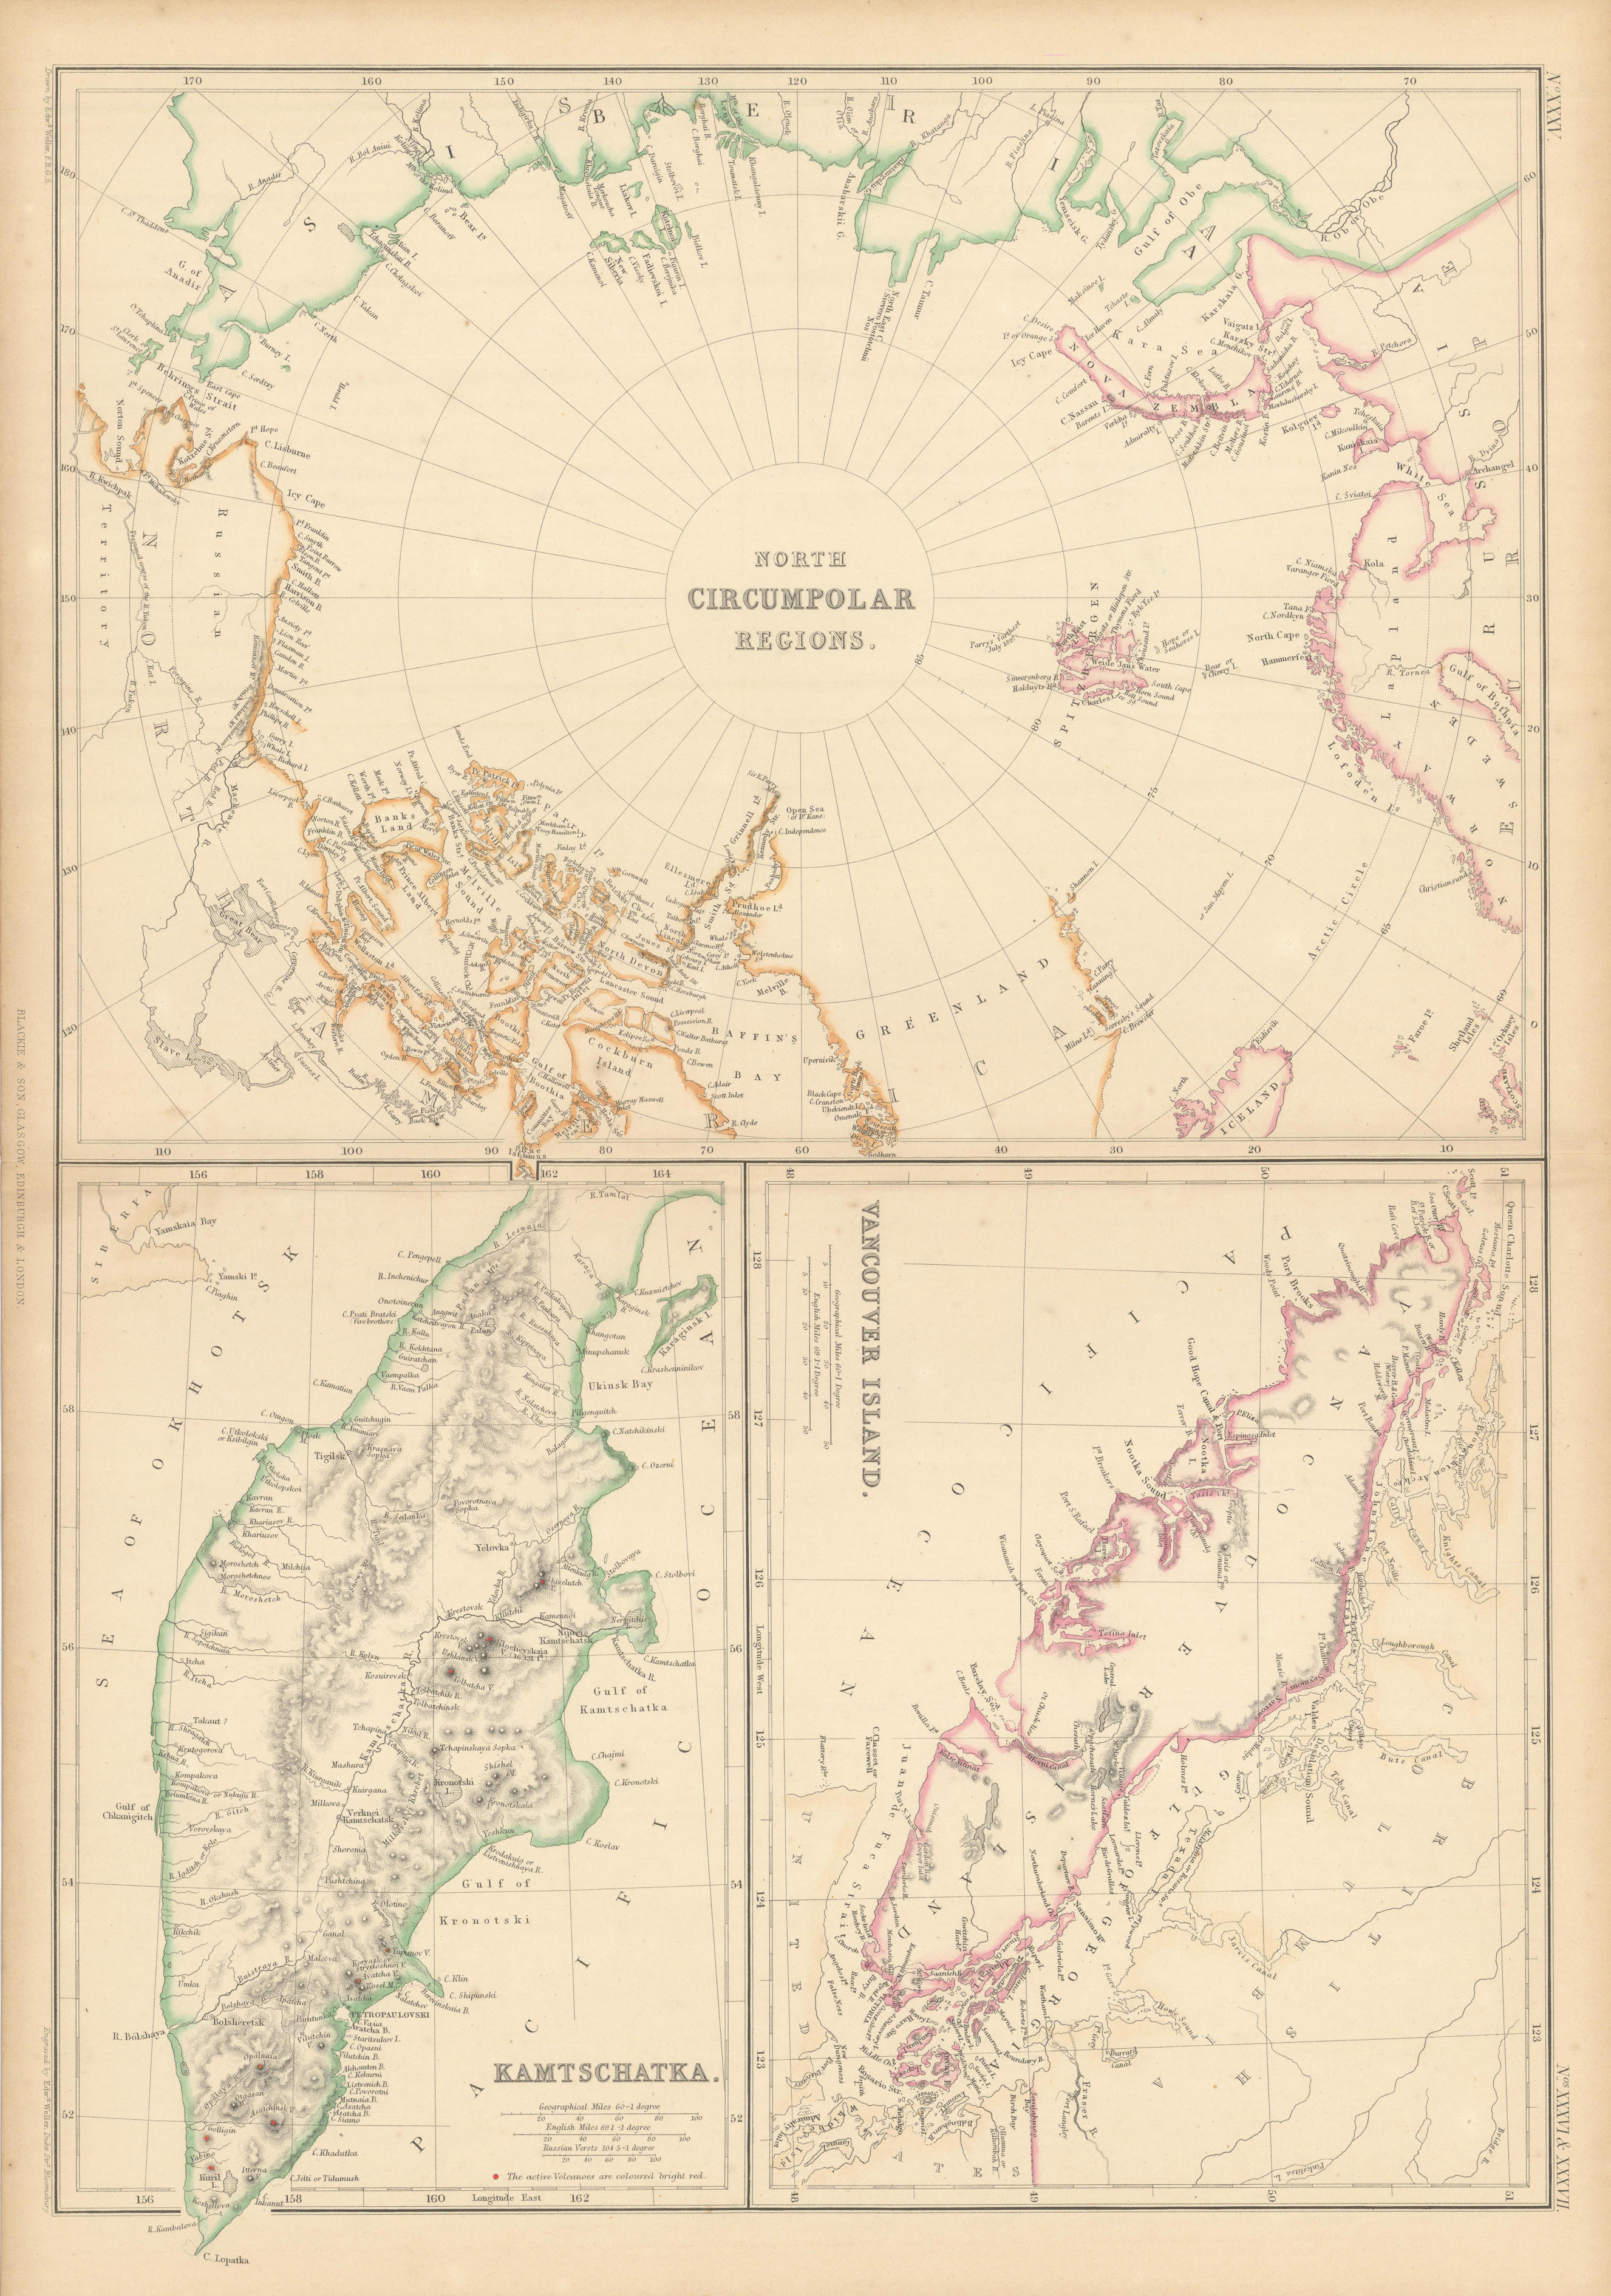 Associate Product North Circumpolar Regions. Vancouver Island. Kamchatka volcanoes WELLER 1859 map